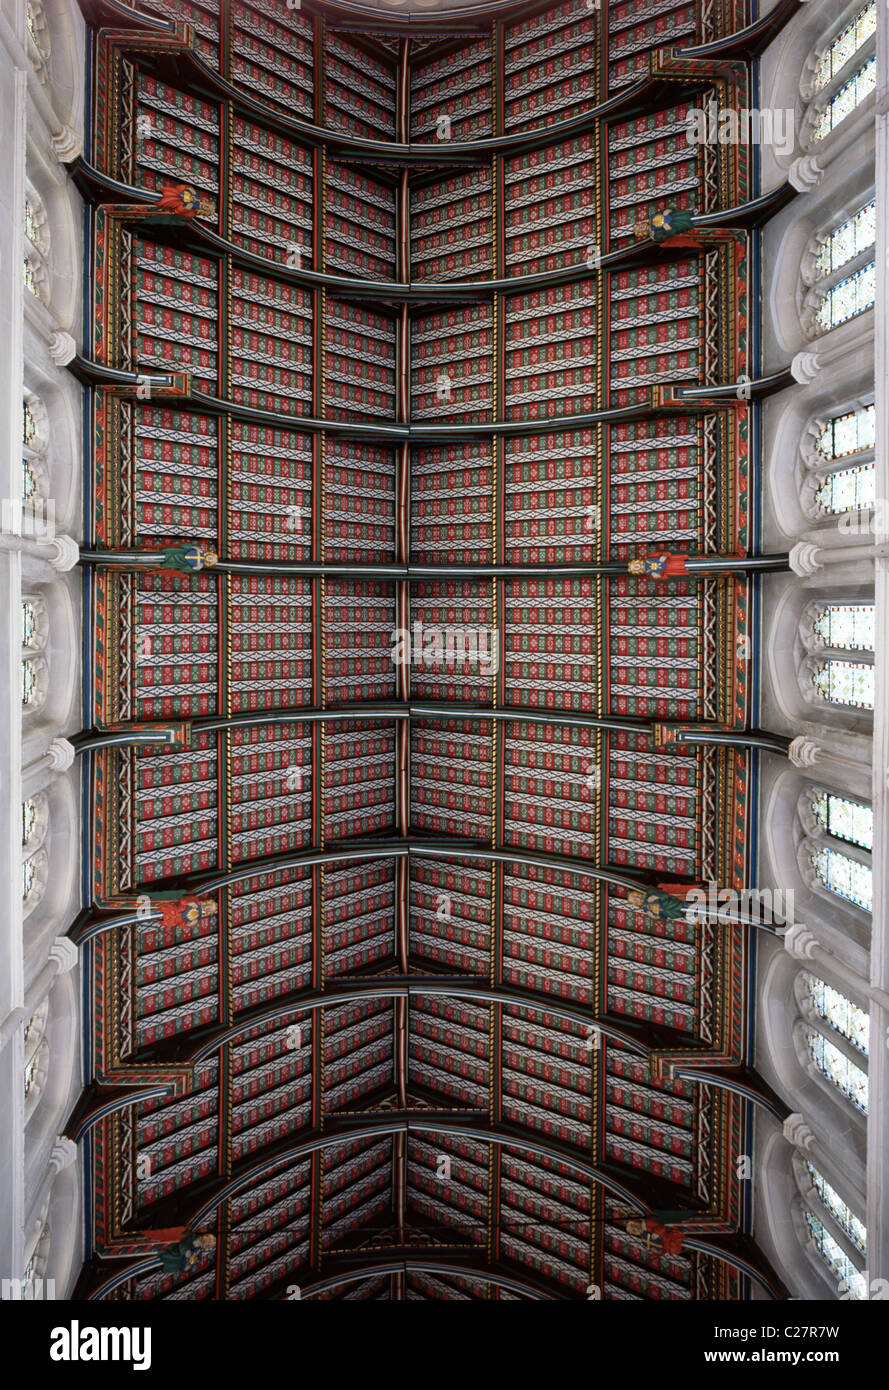 St Edmundsbury Cathedral, Bury St Edmunds, Suffolk, England. Nave ceiling Stock Photo